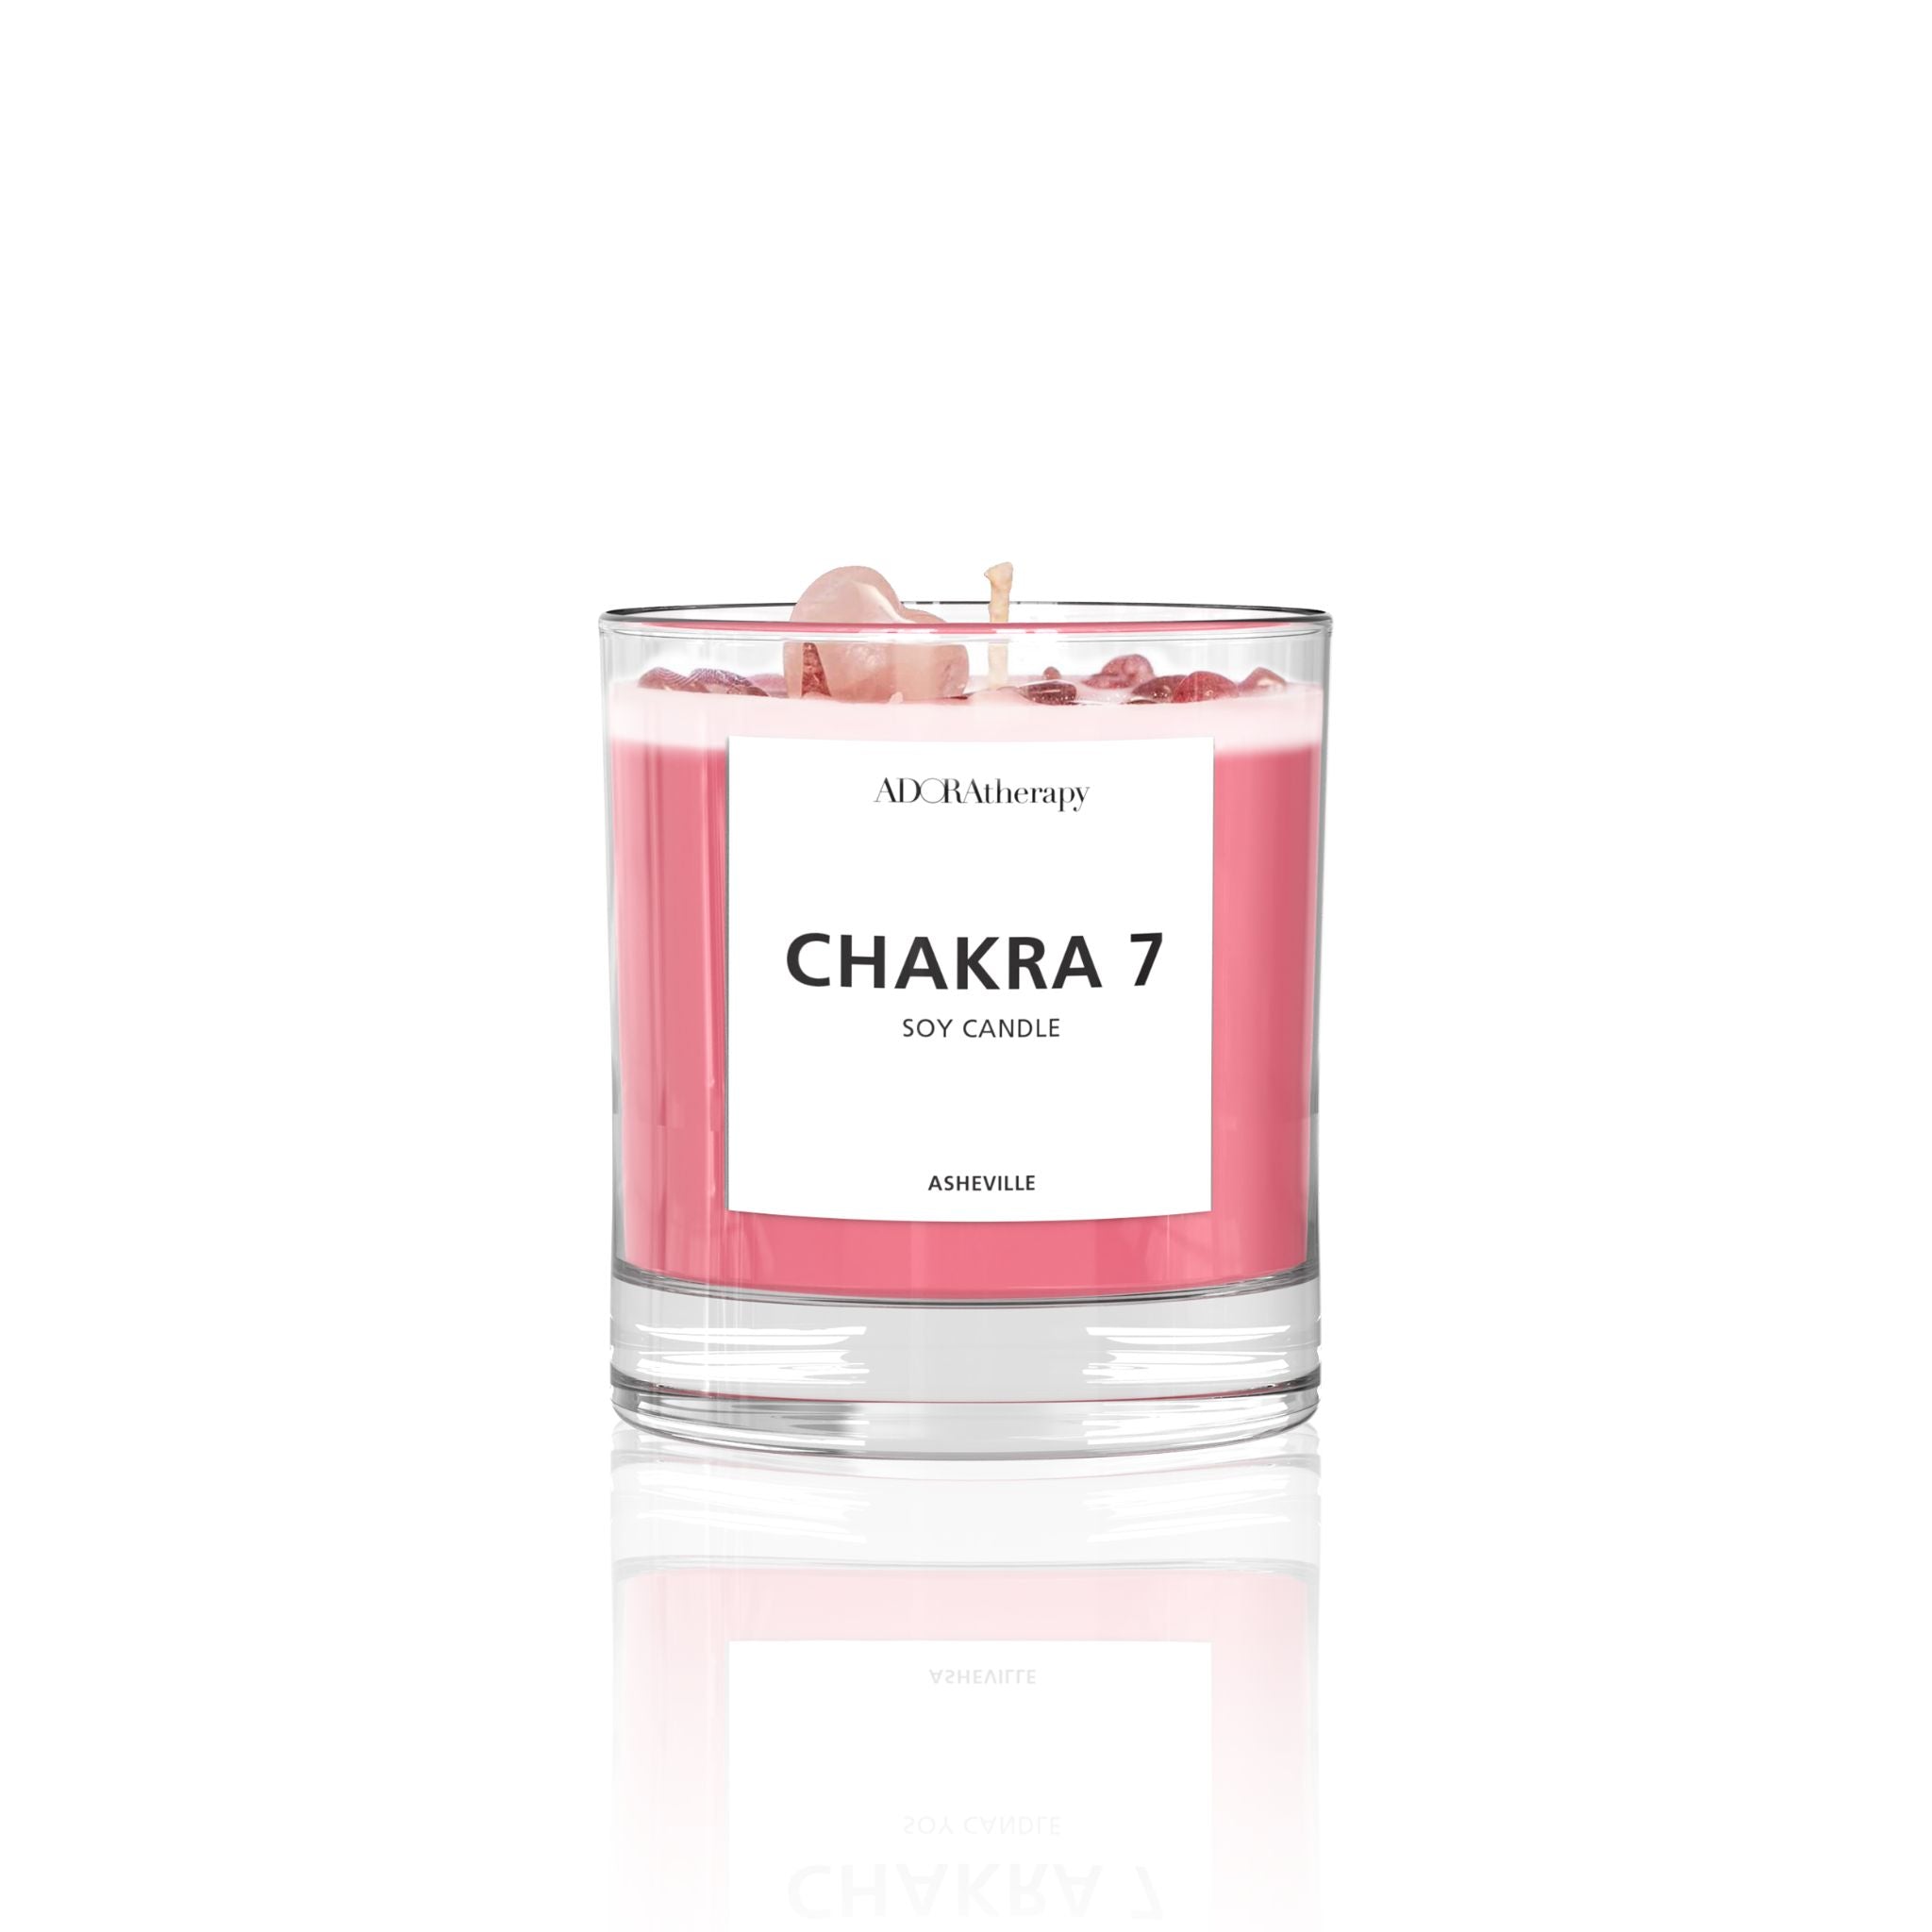 Chakra 7 soy candle